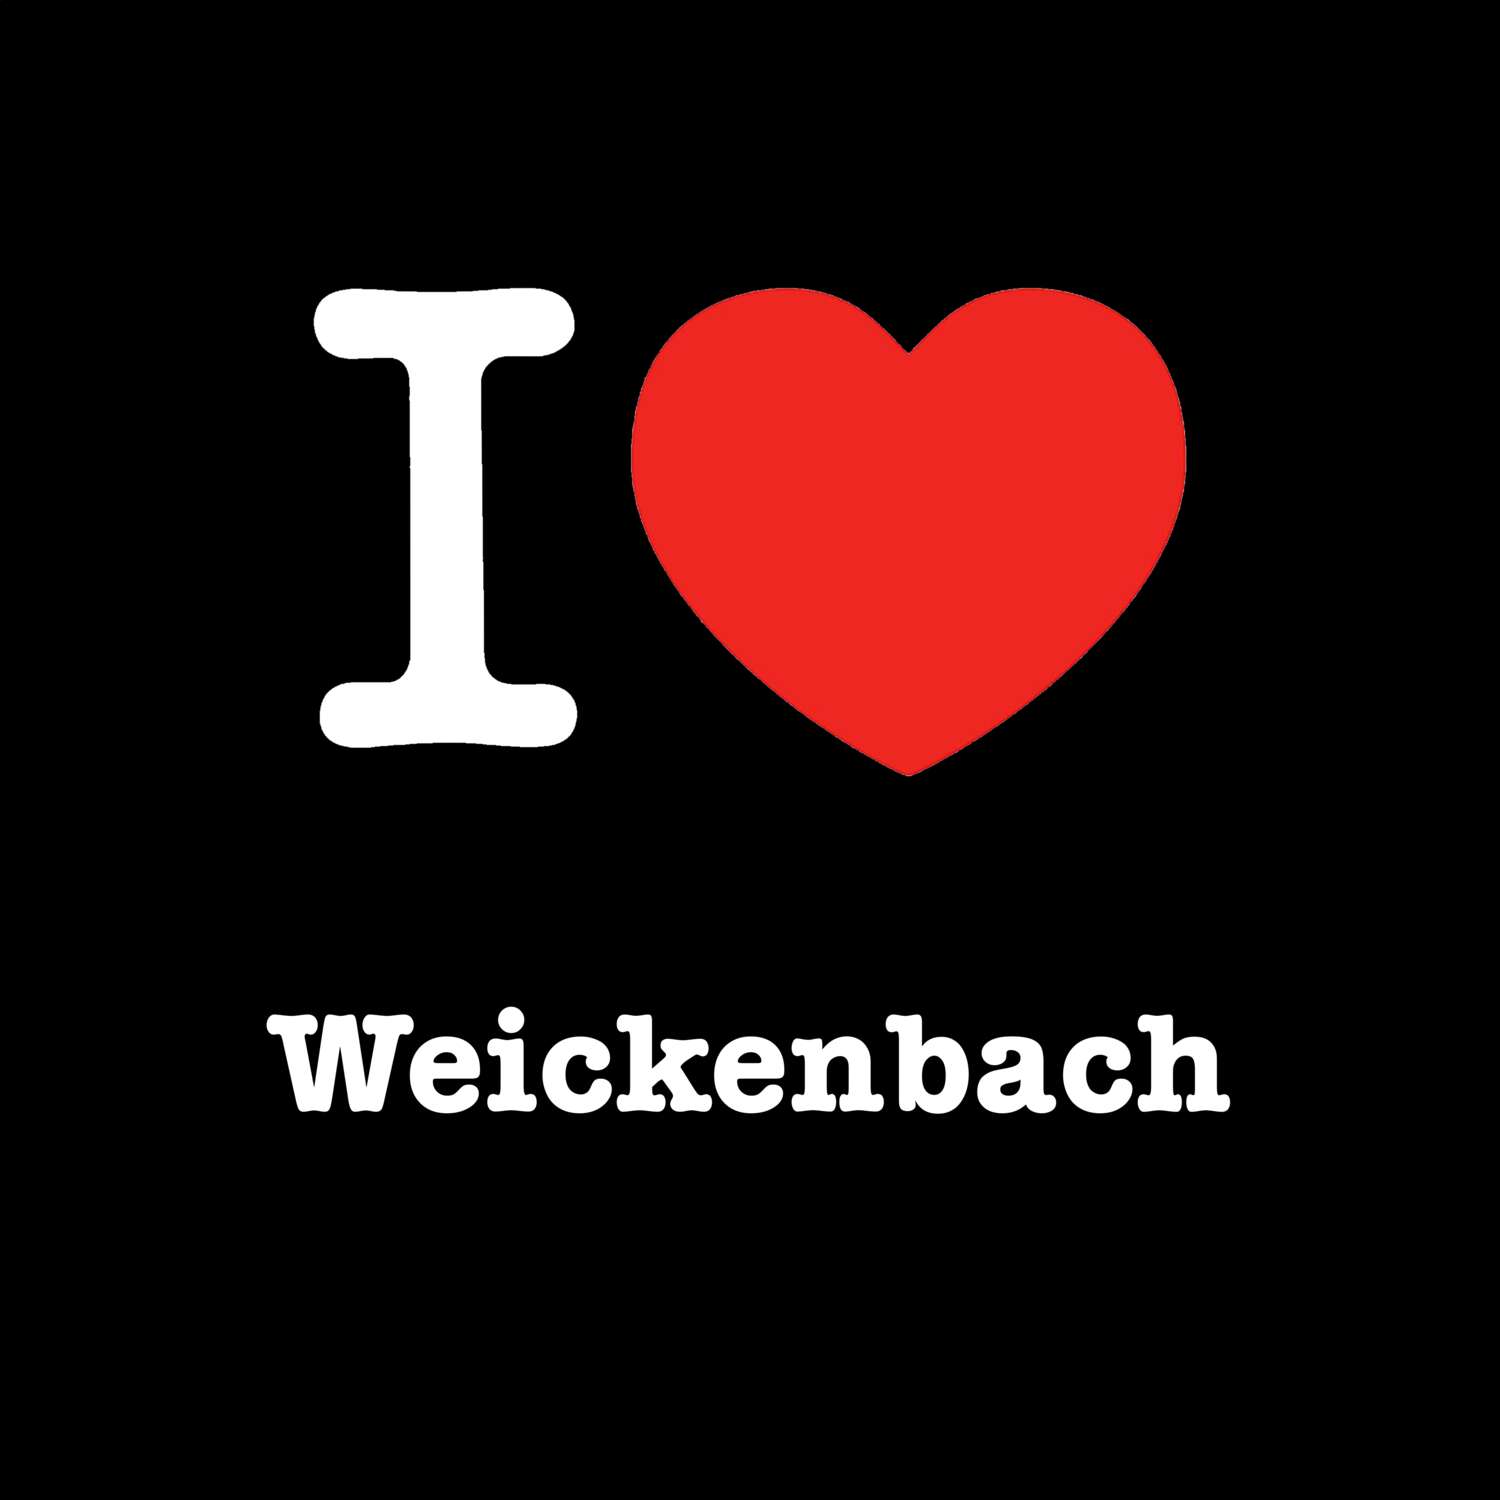 Weickenbach T-Shirt »I love«